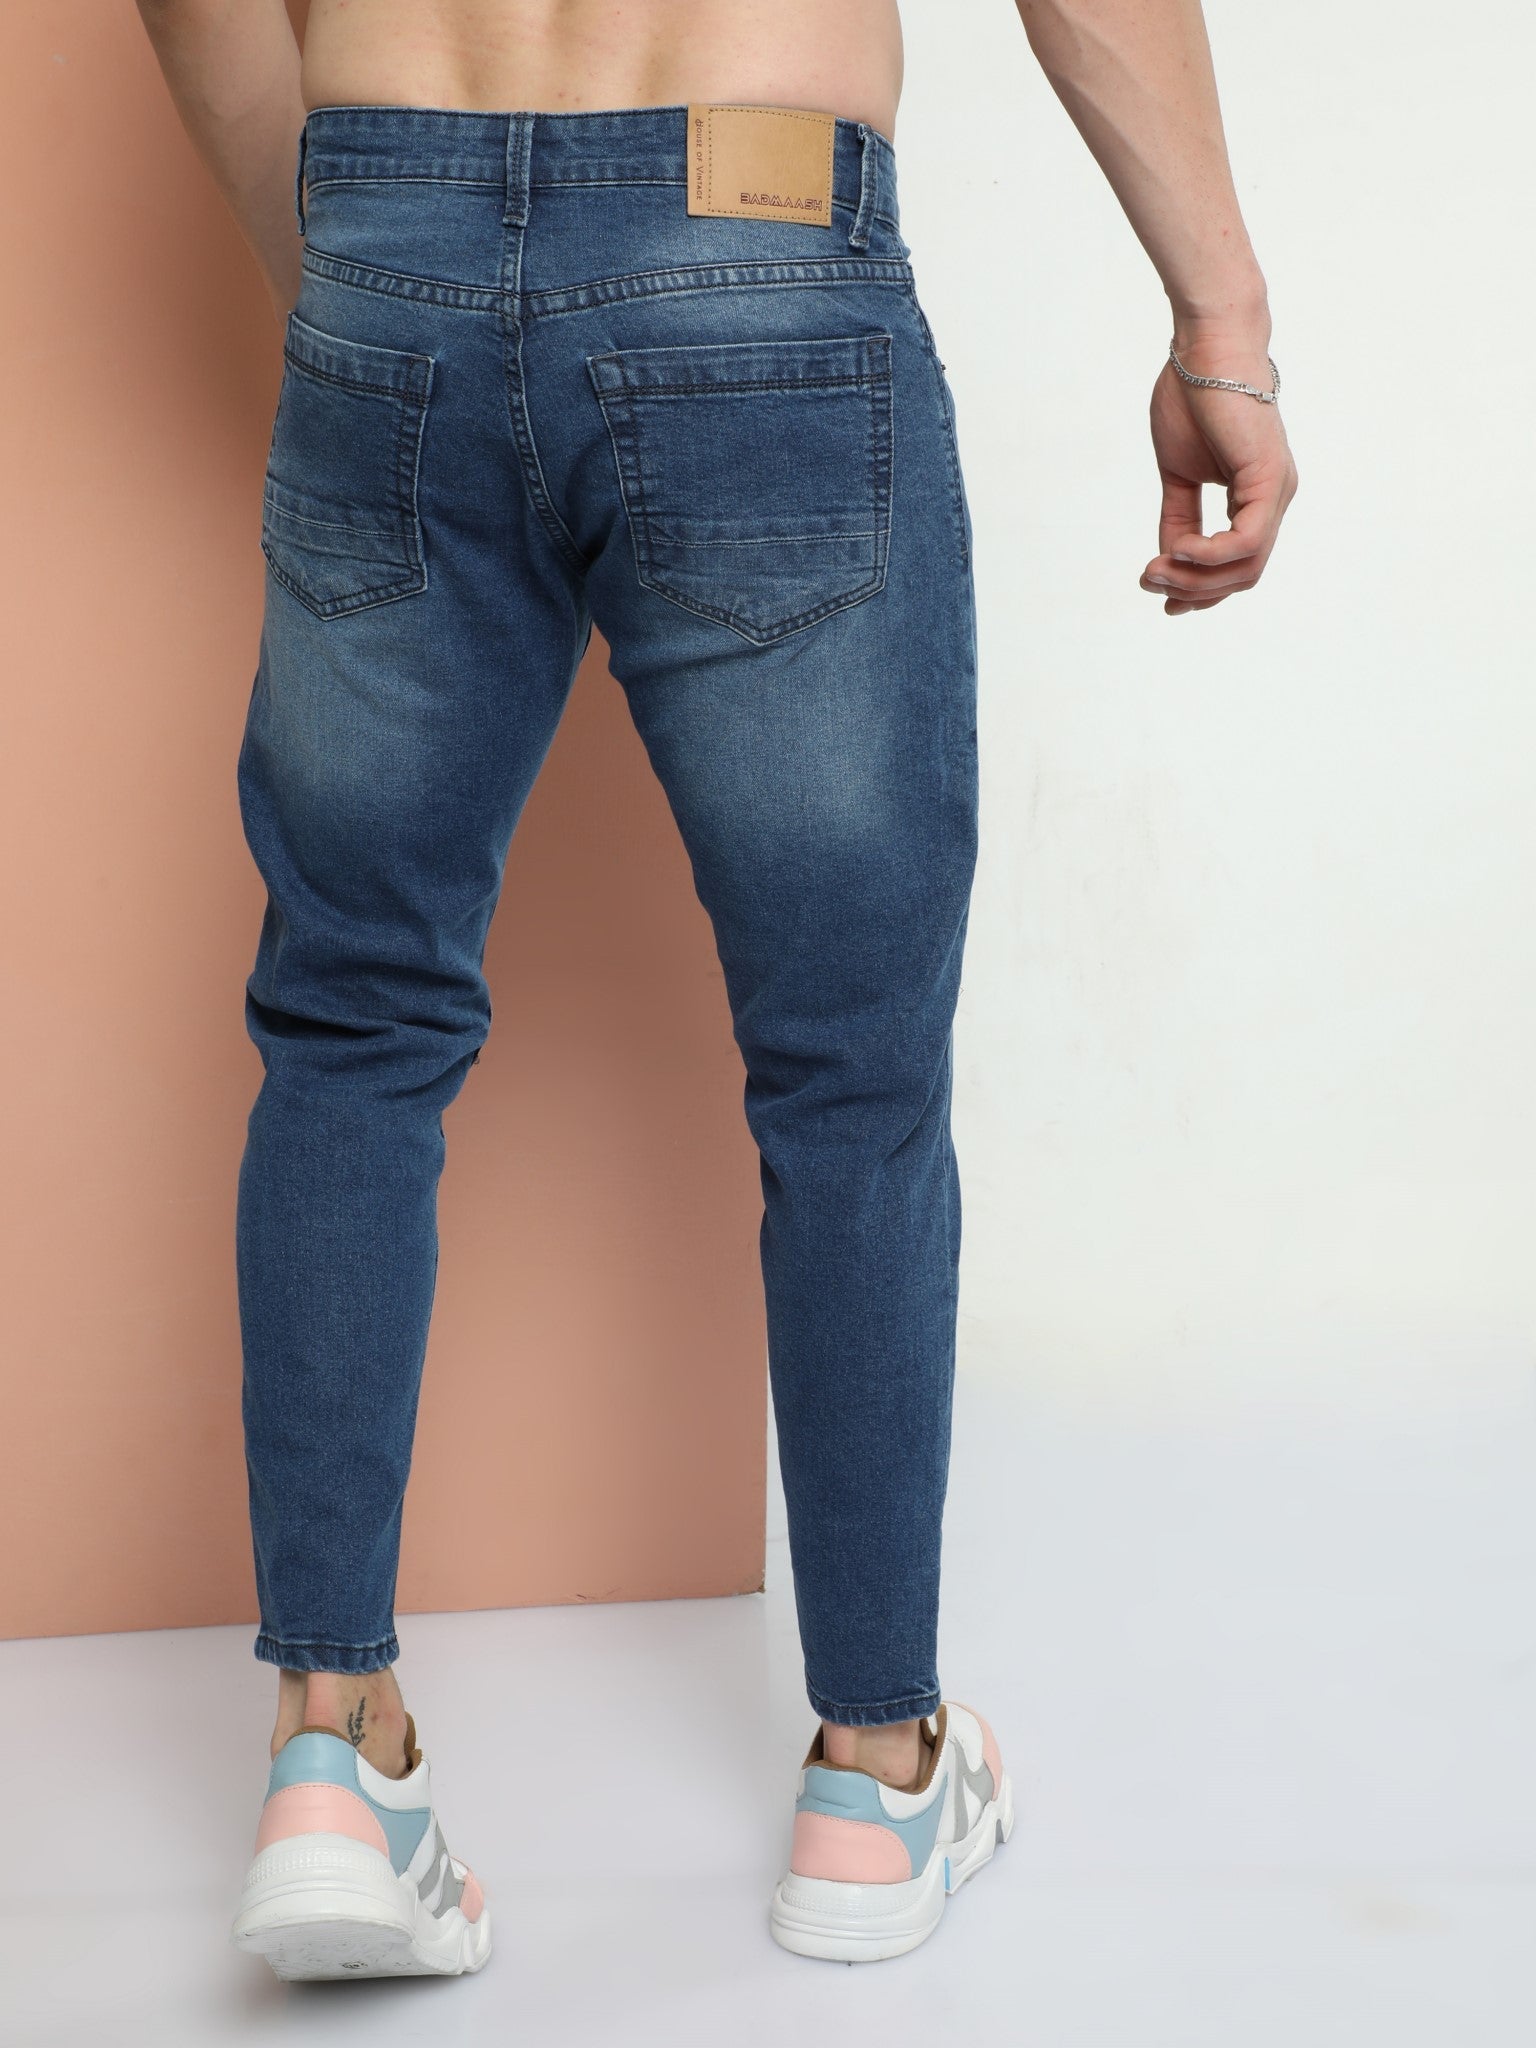 Superior Blue Skinny Jeans